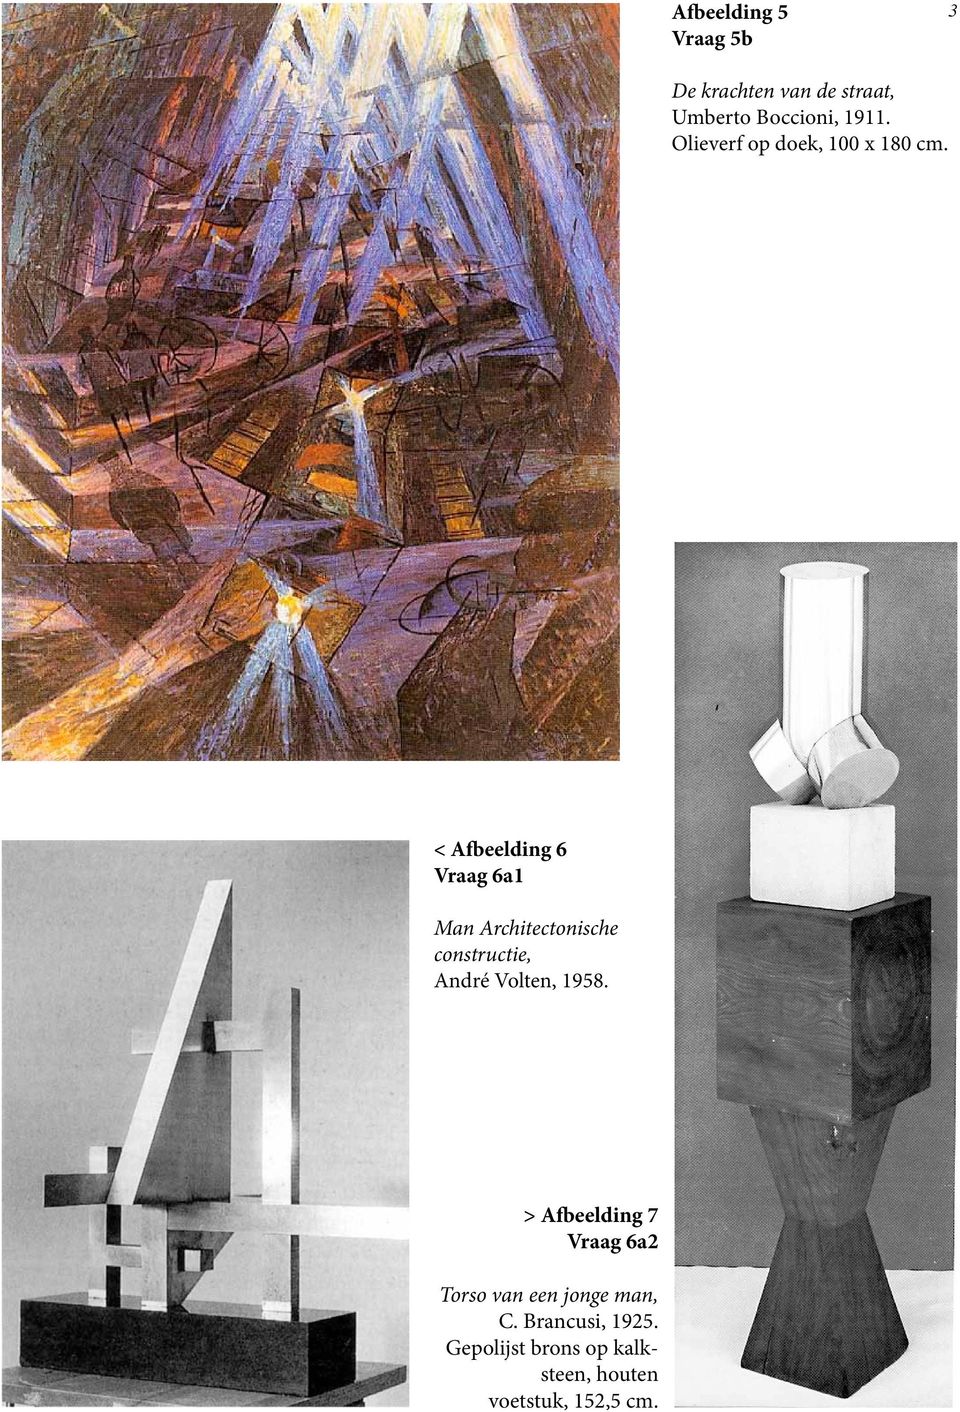 < Afbeelding 6 Vraag 6a1 Man Architectonische constructie, André Volten, 1958.